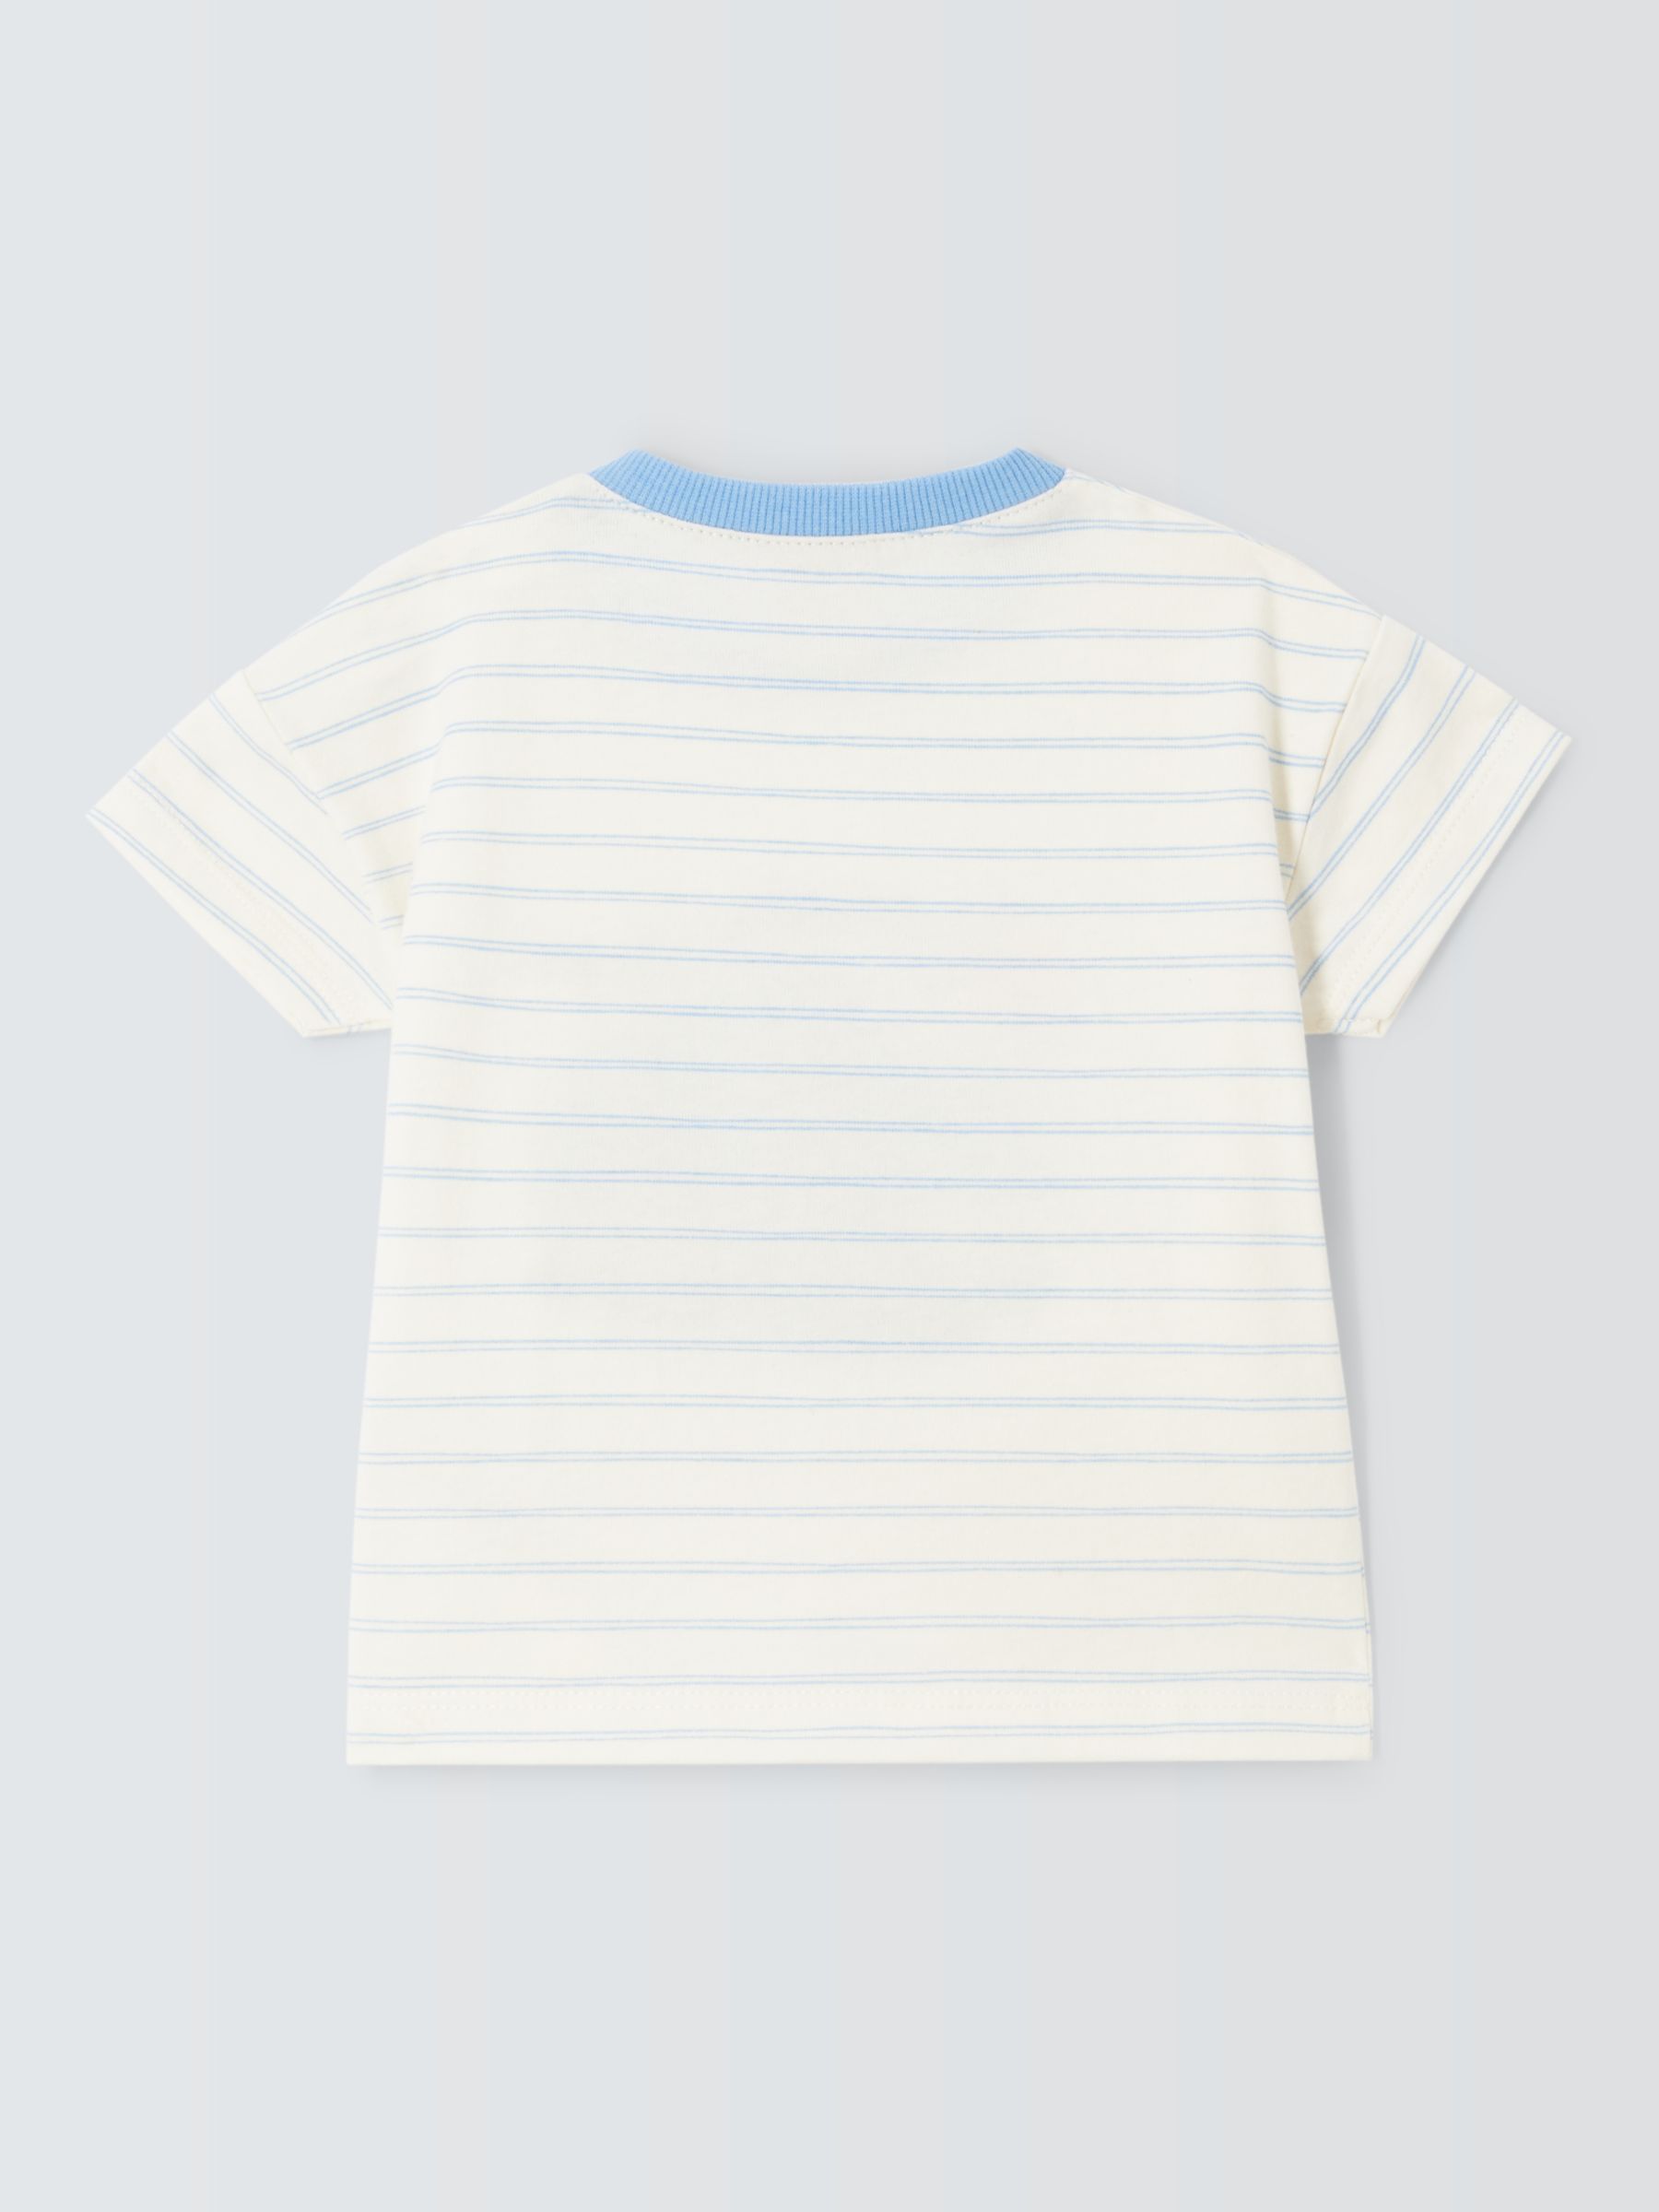 John Lewis Baby Adventure Awaits Stripe T-Shirt, White/Multi, 9-12 months